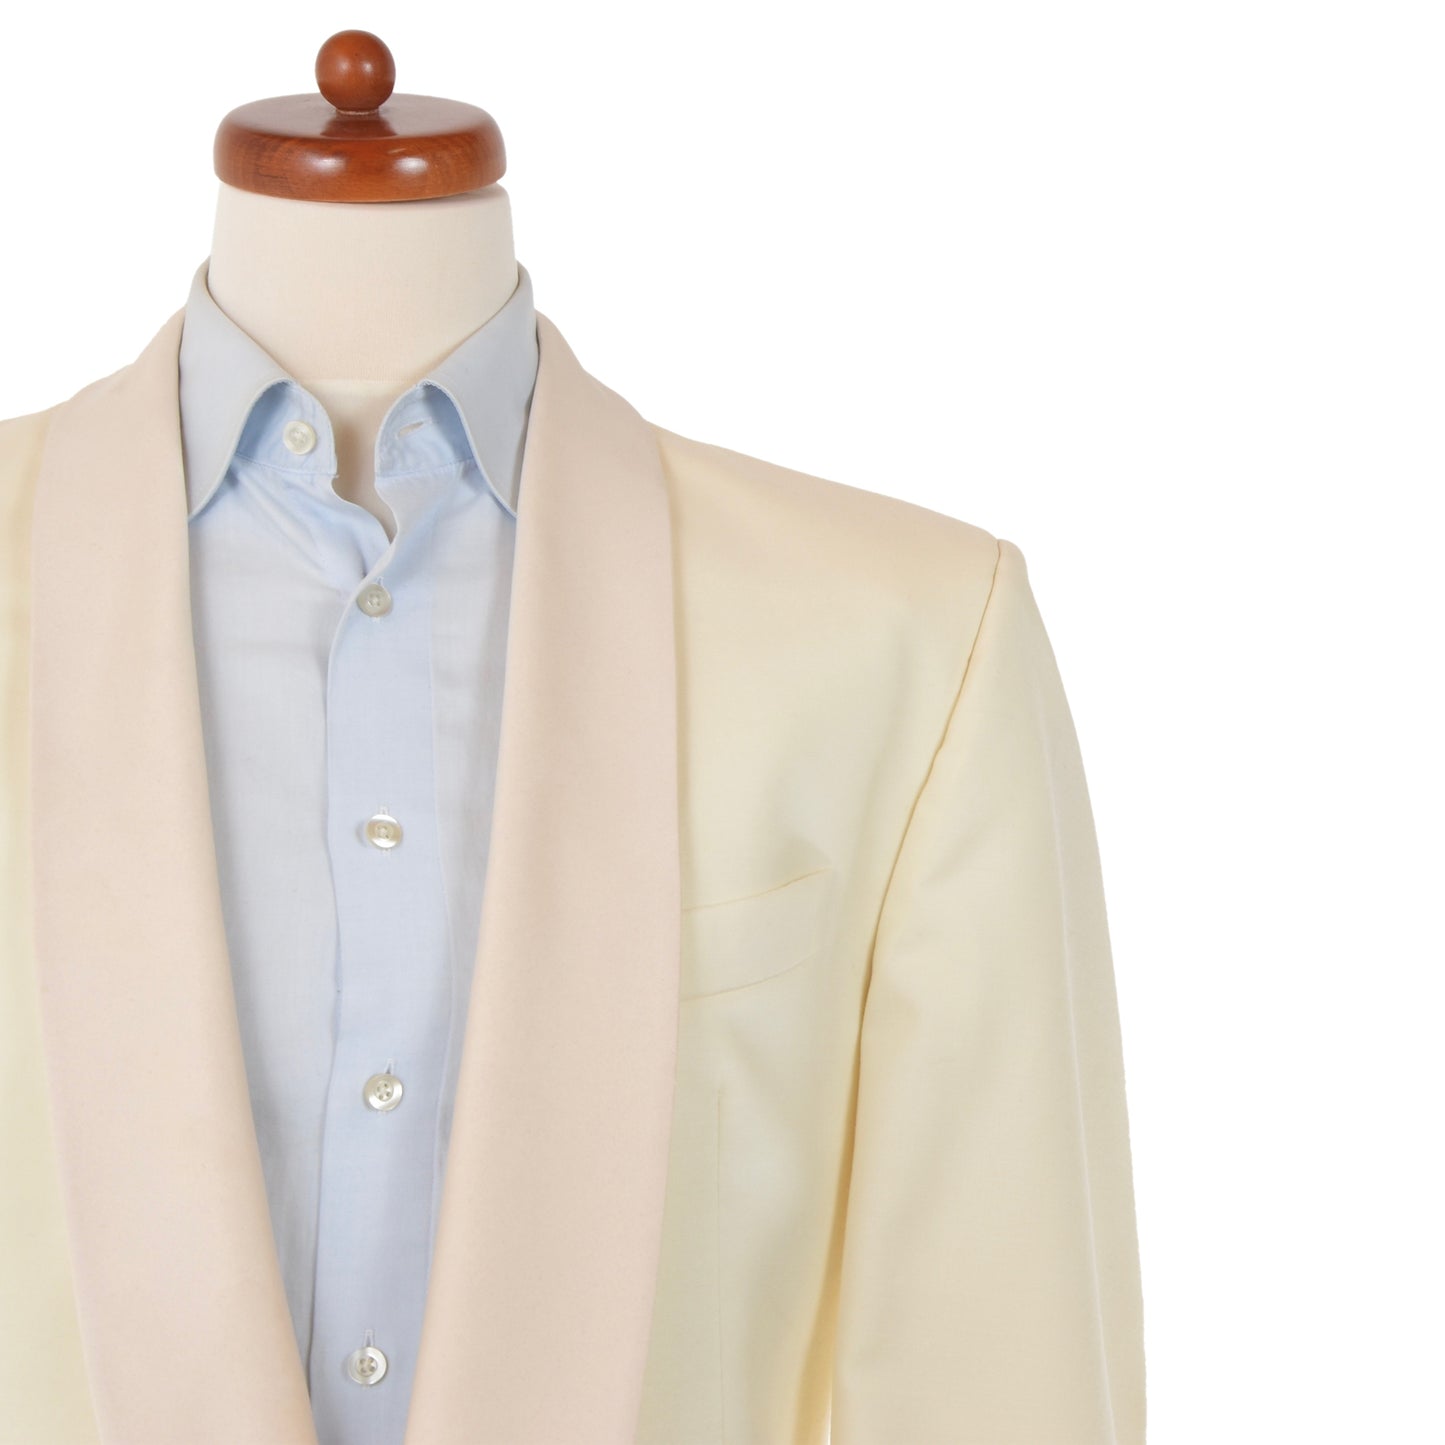 Topas Design 100% Wool Shawl Collared Tuxedo Jacket Size 102 - Cream White